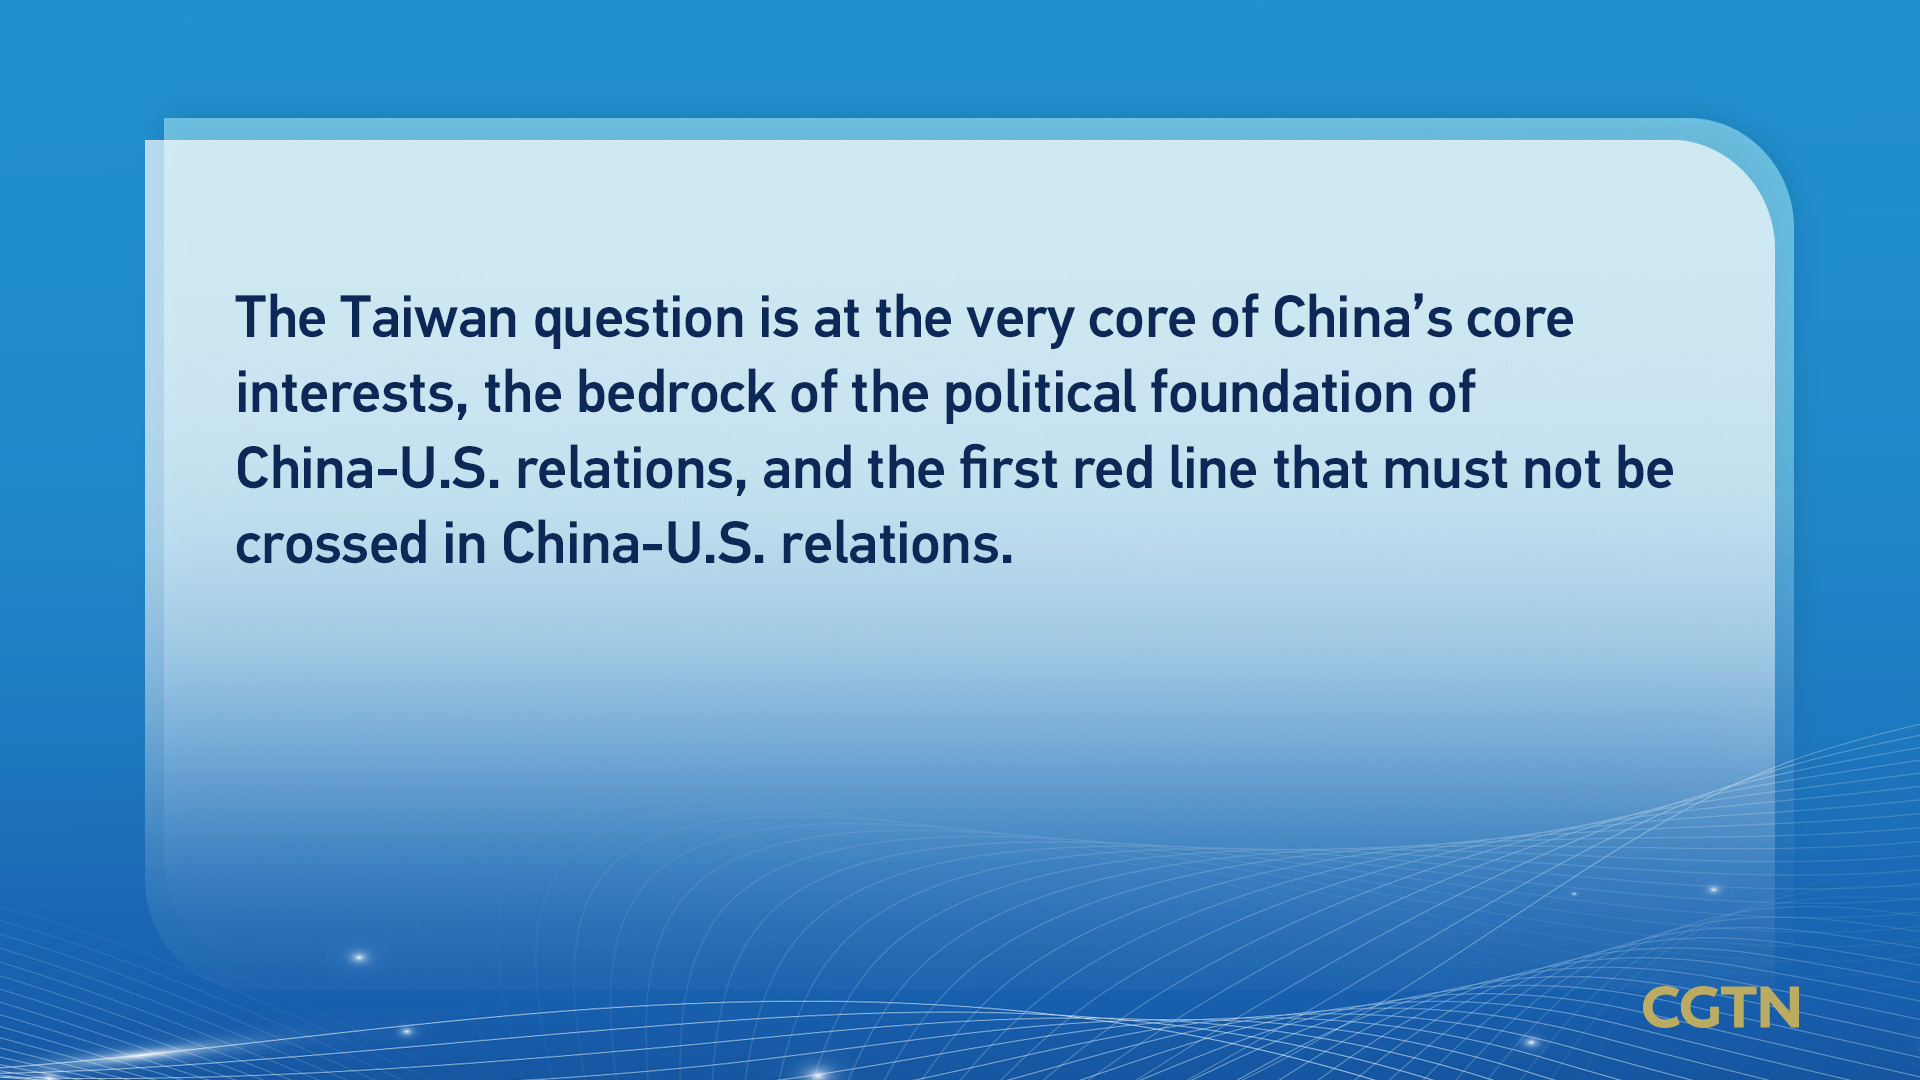 Xi Jinping's key quotes from meeting with Joe Biden